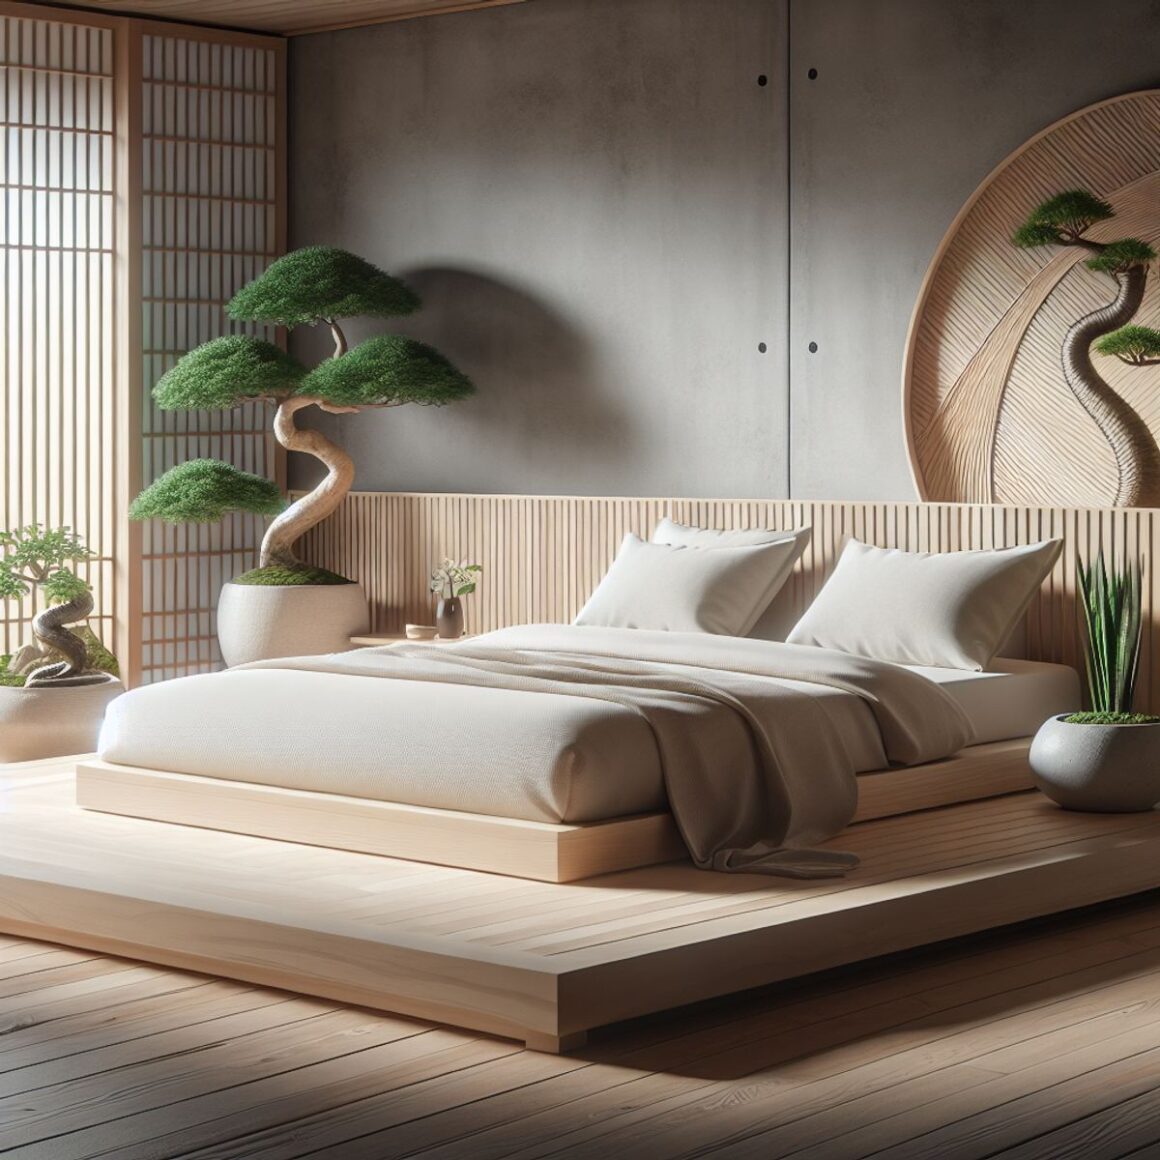 Japandi-style bedroom with light wood platform bed, bonsai, and snake plants